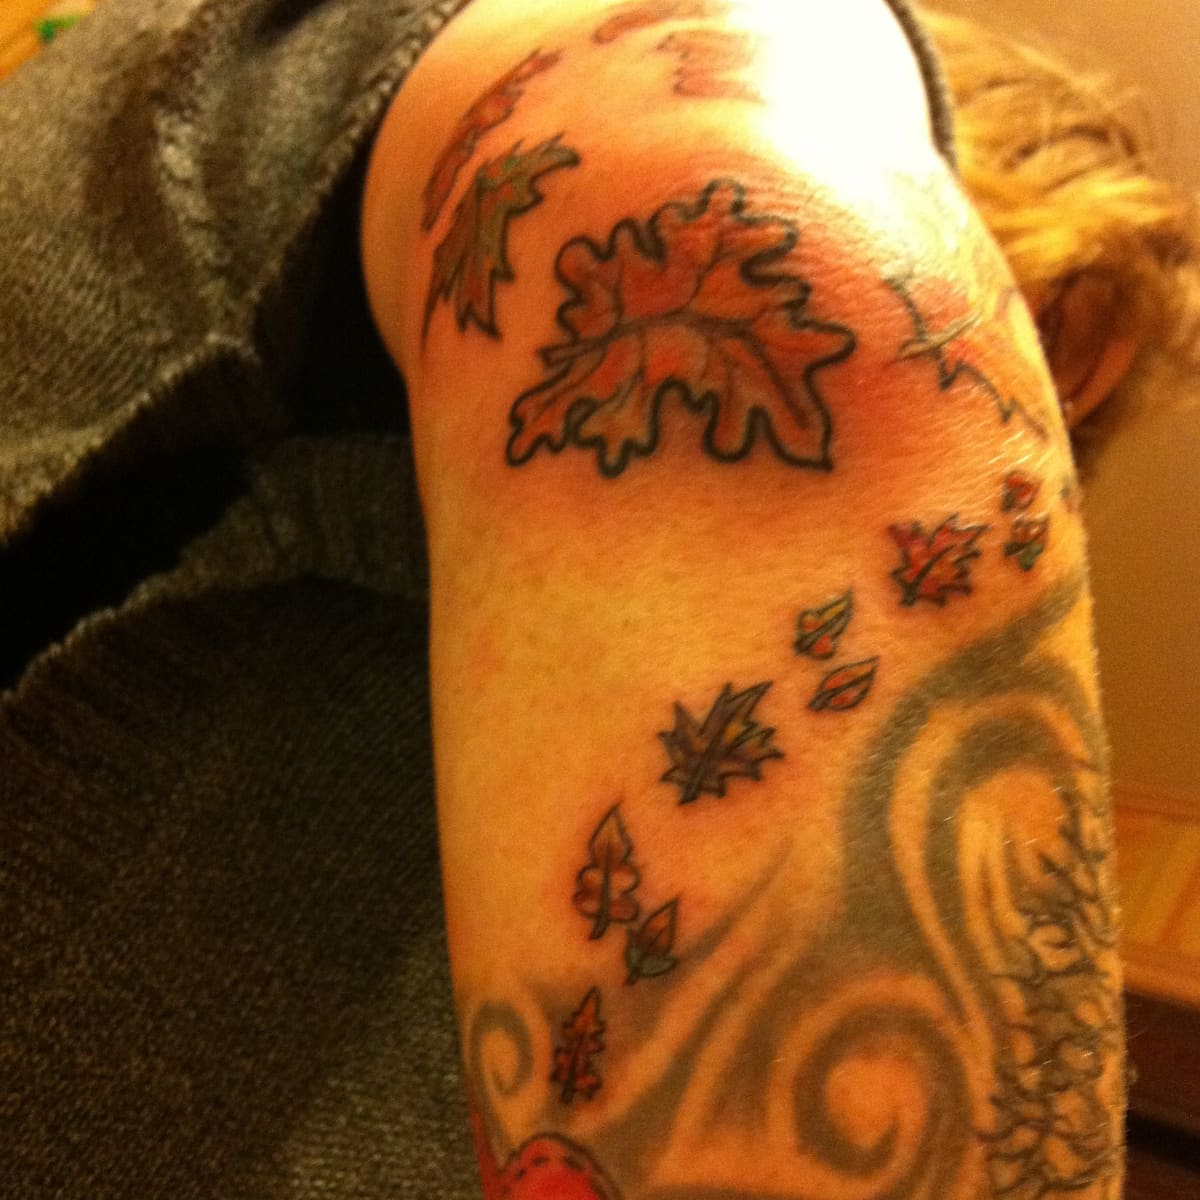 Port 13 Tattoo - Elbow tattoo by @poindextertattoos @... | Facebook